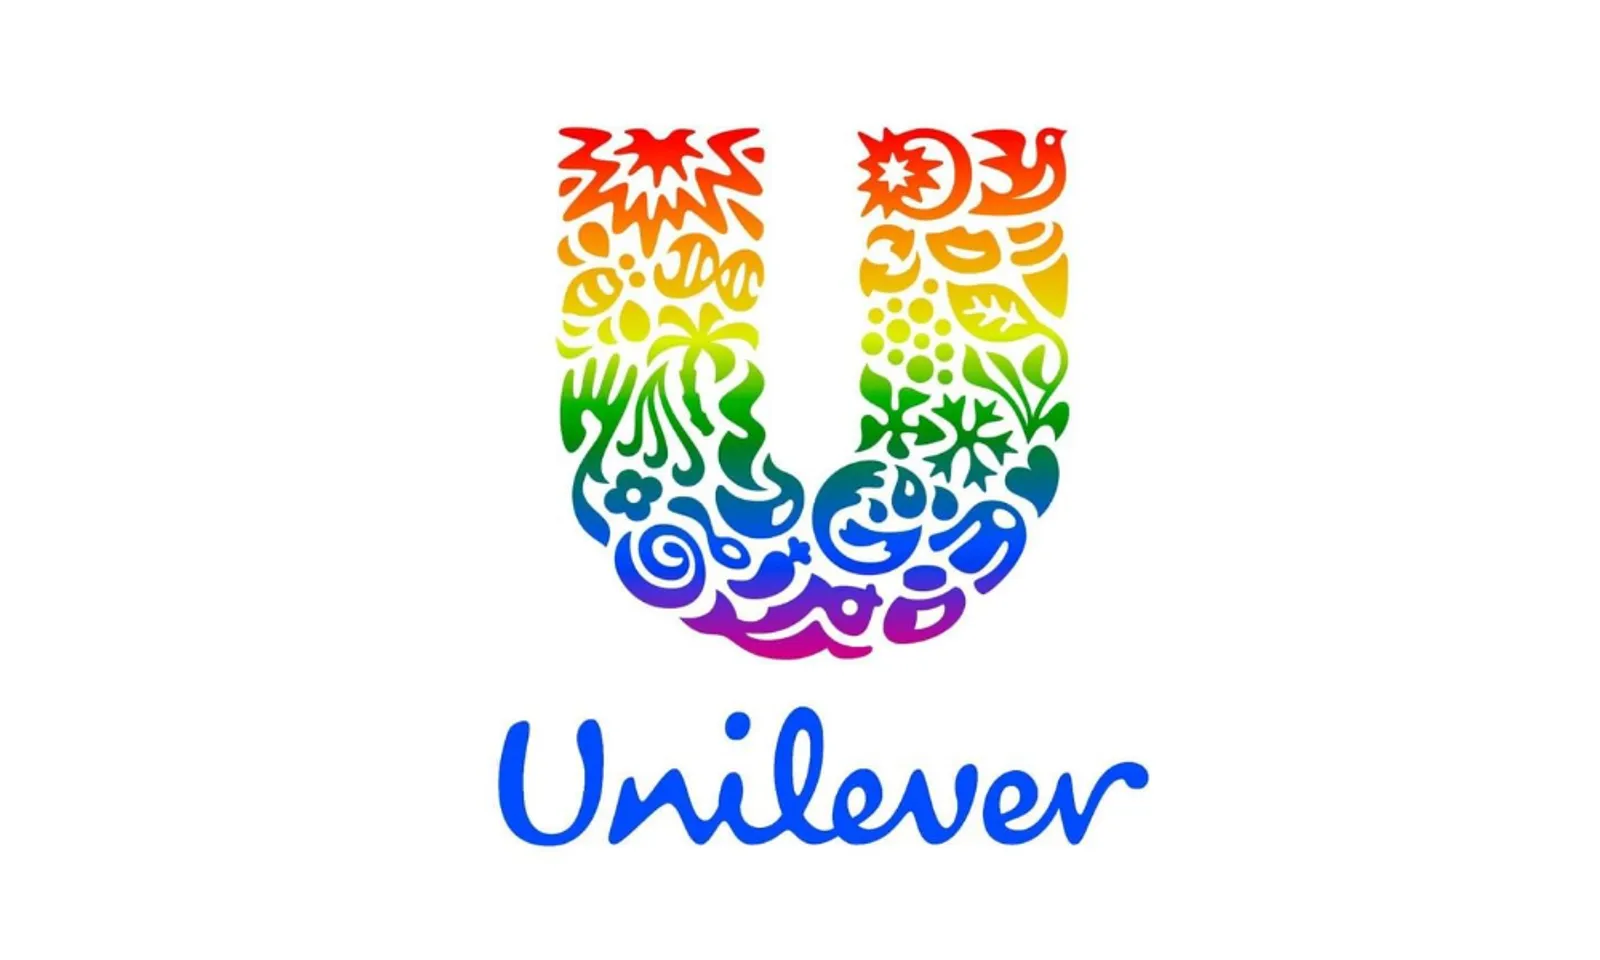 Dukung LGBTQ+, Instagram Unilever Diserbu Netizen Indonesia 